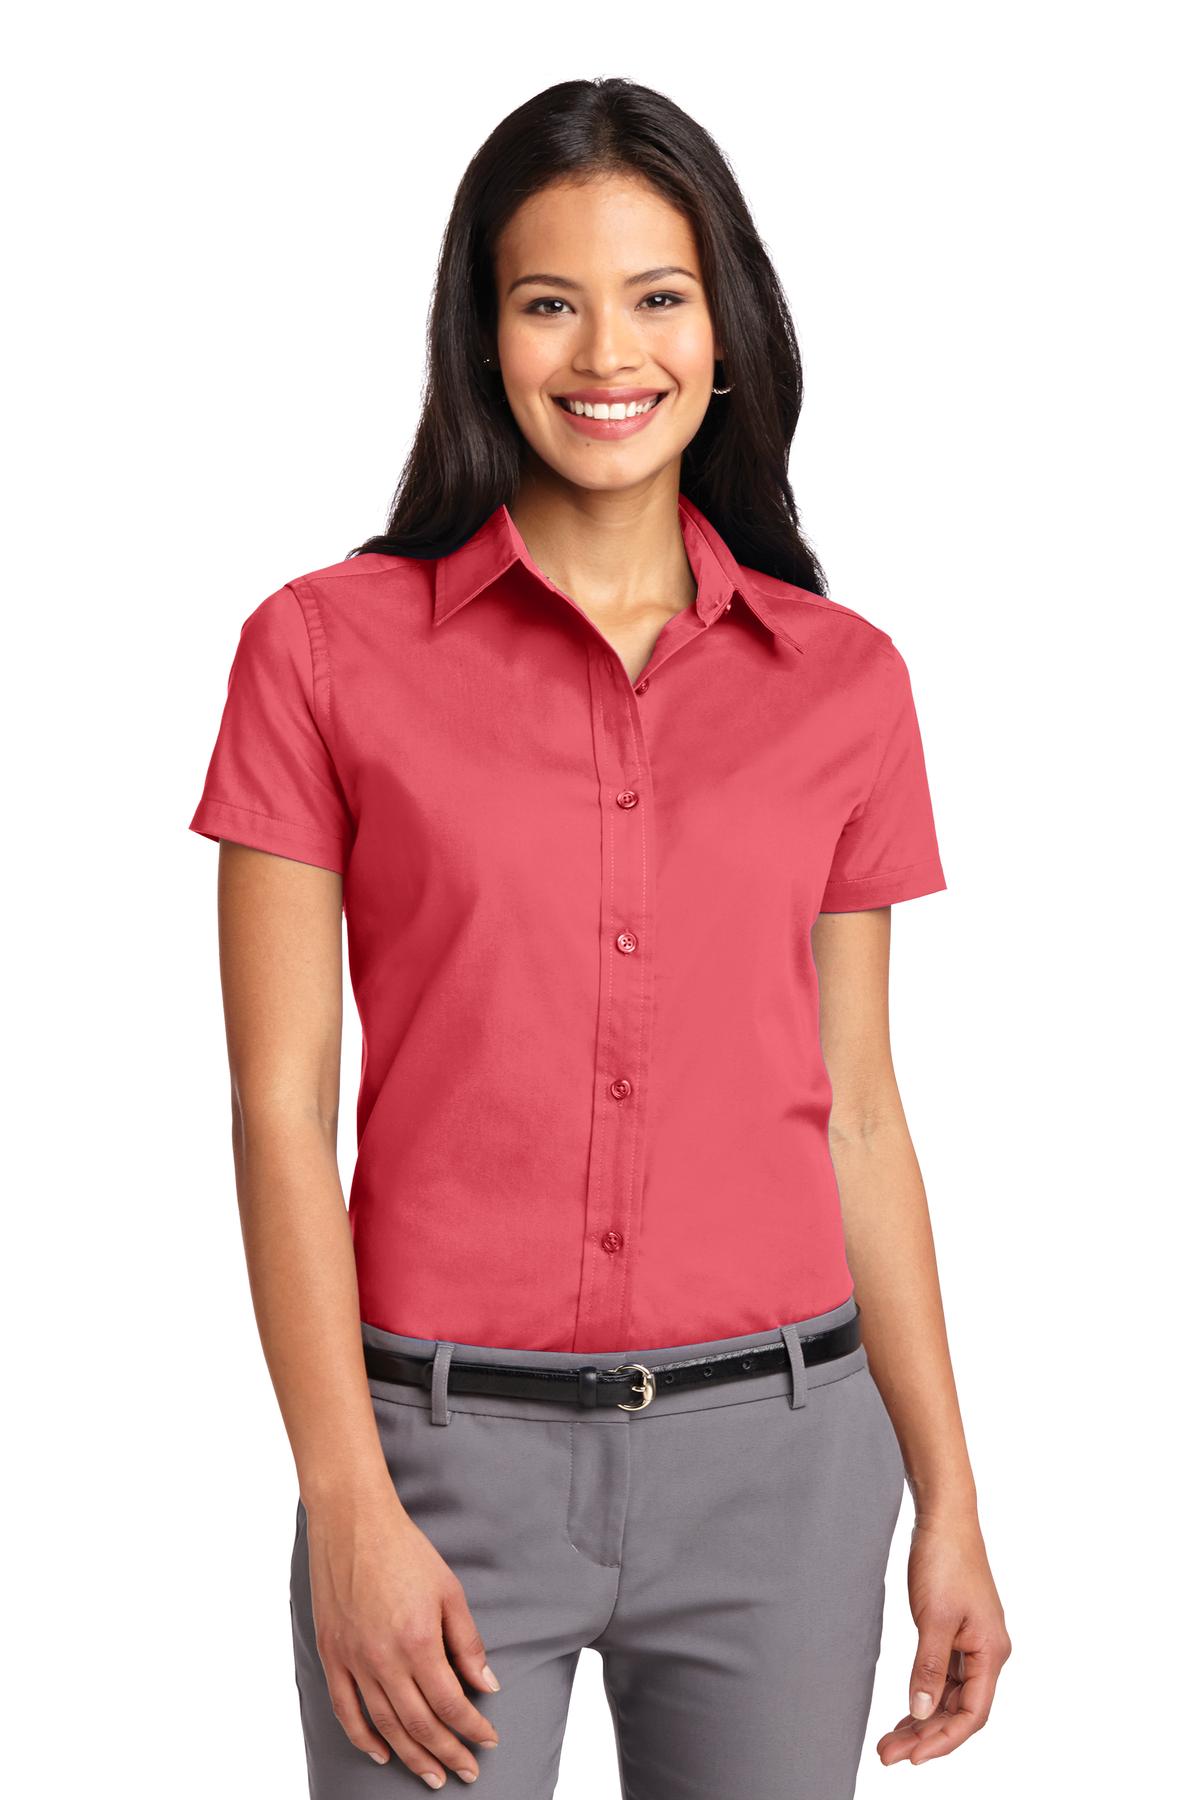 Port Authority Ladies Short Sleeve Easy Care Shirt. L508